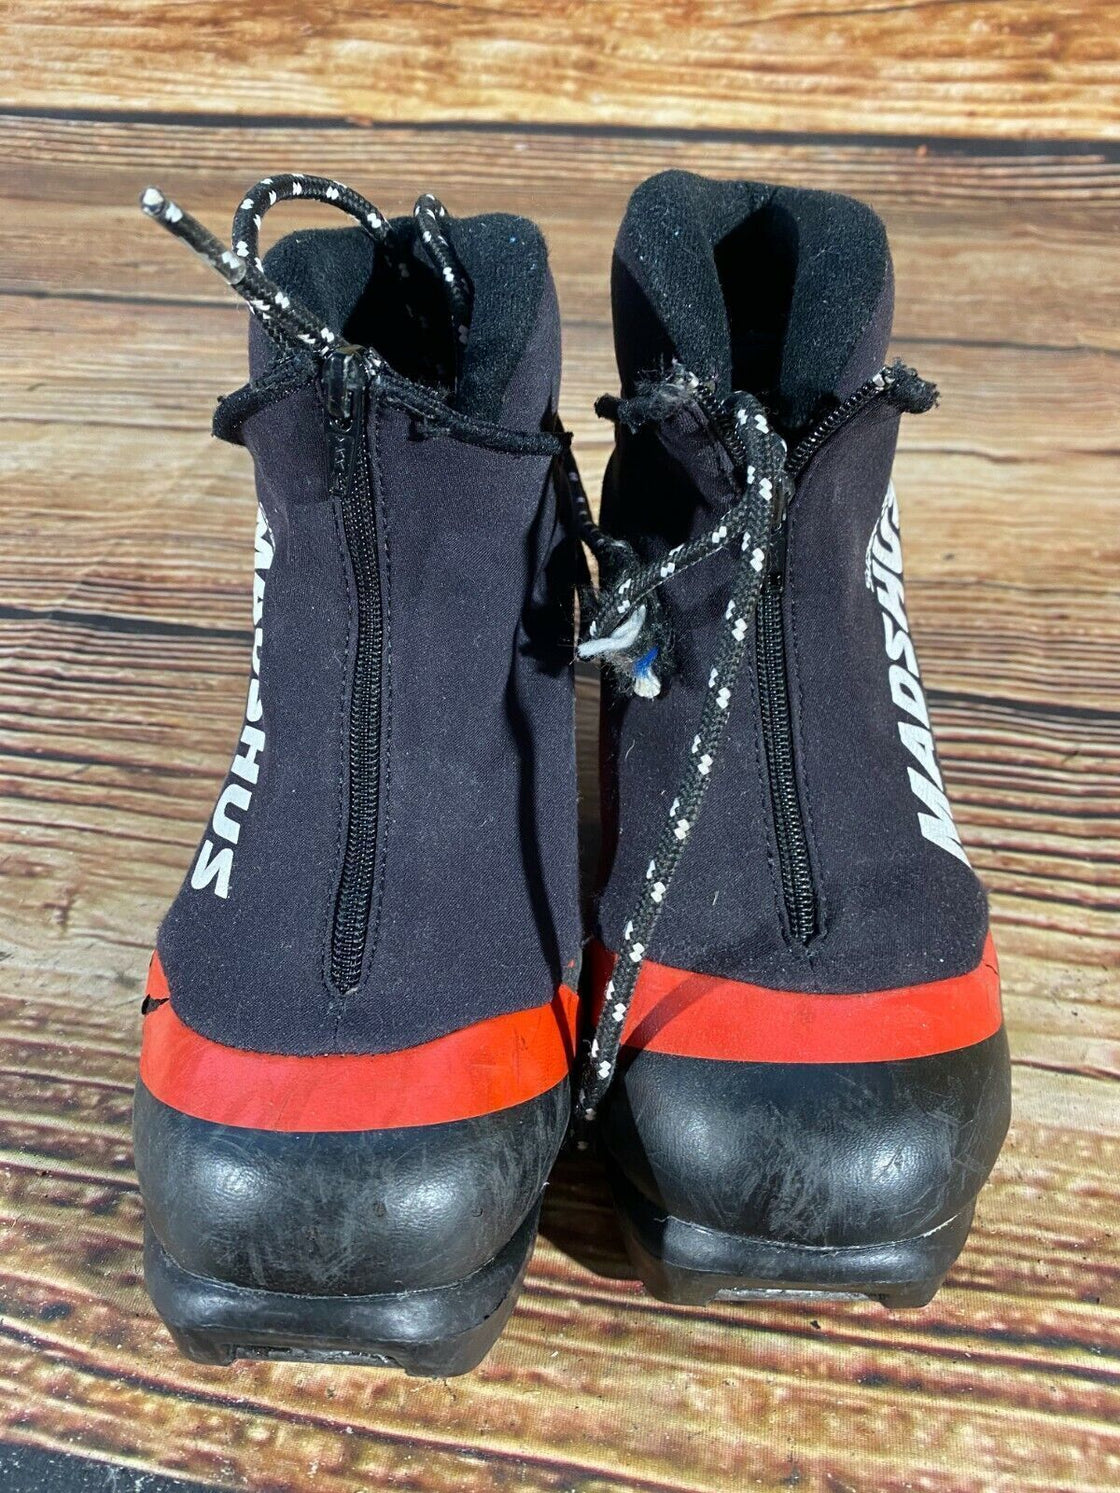 Madshus Super Race Kids Cross Country Ski Boots Size EU31 US13 NNN bindings